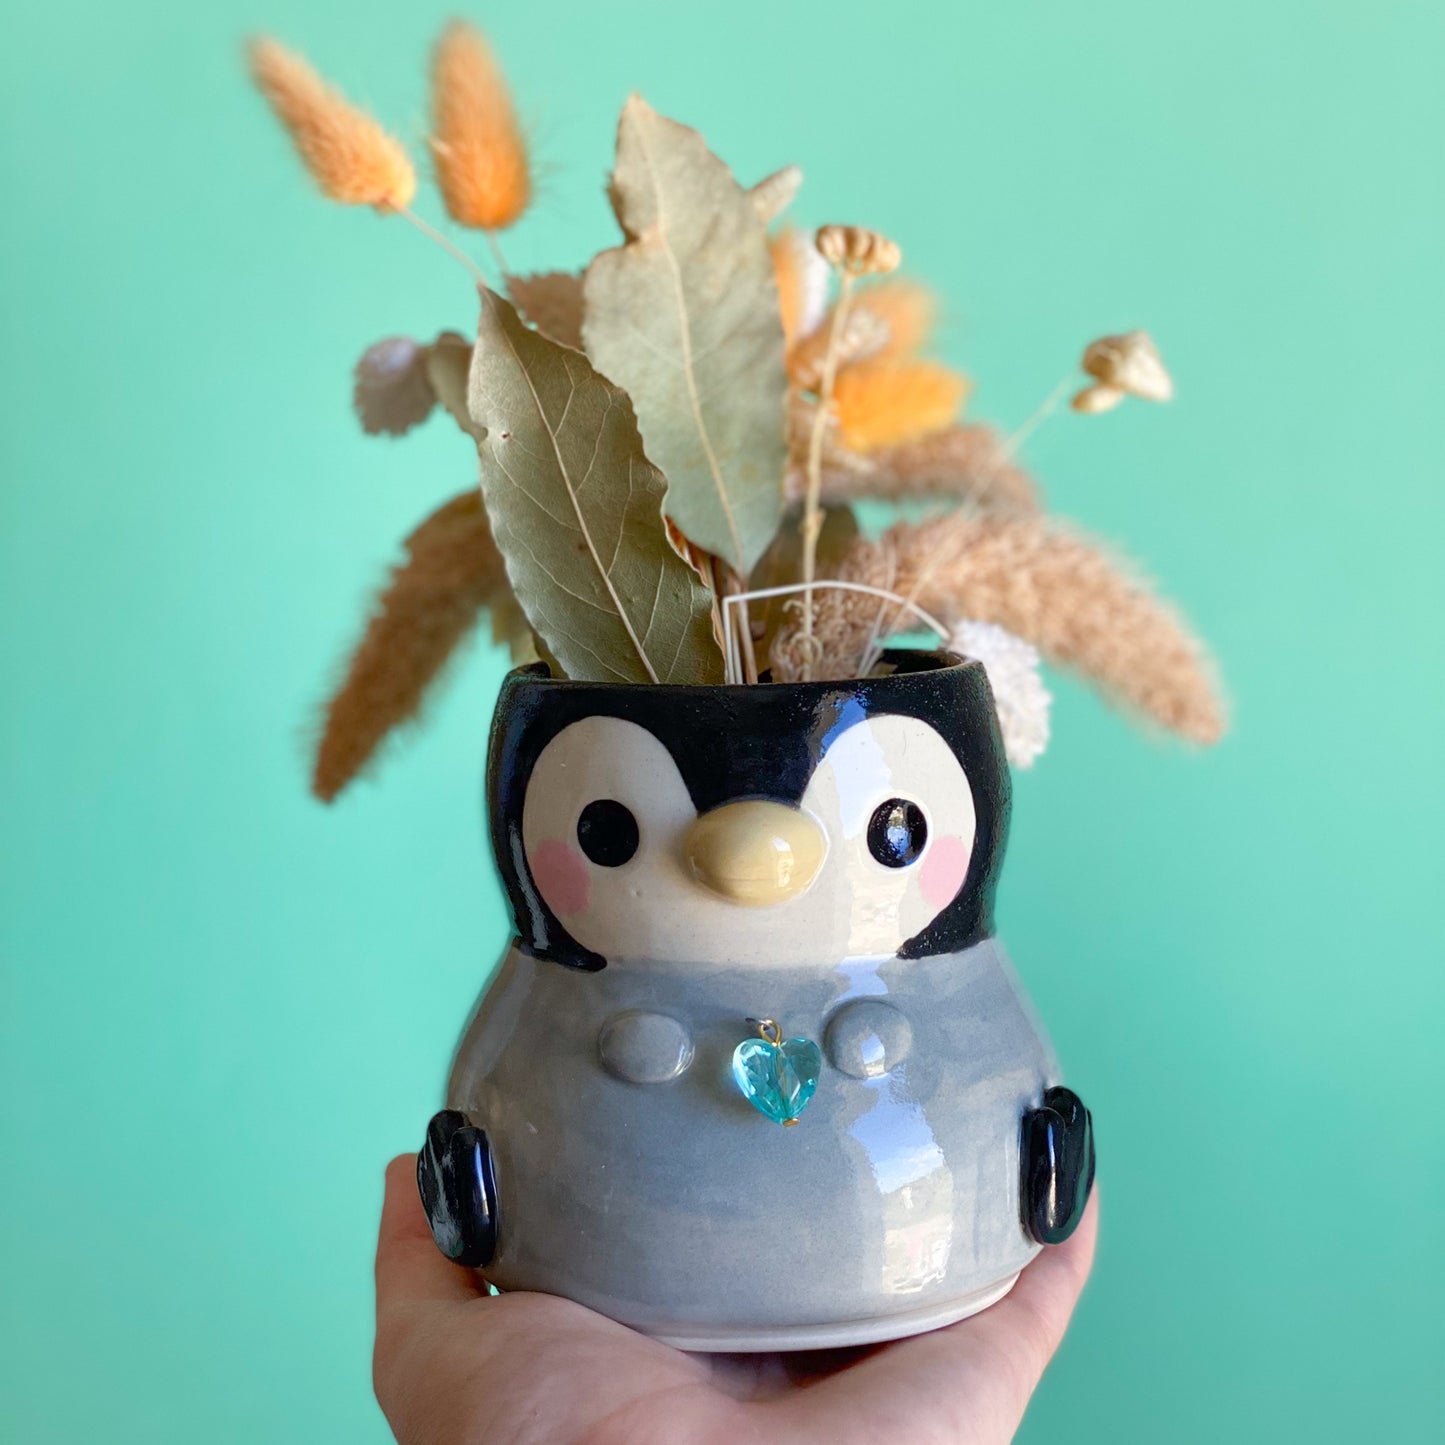 Pingouin dodu - Petit vase (pot non percé)